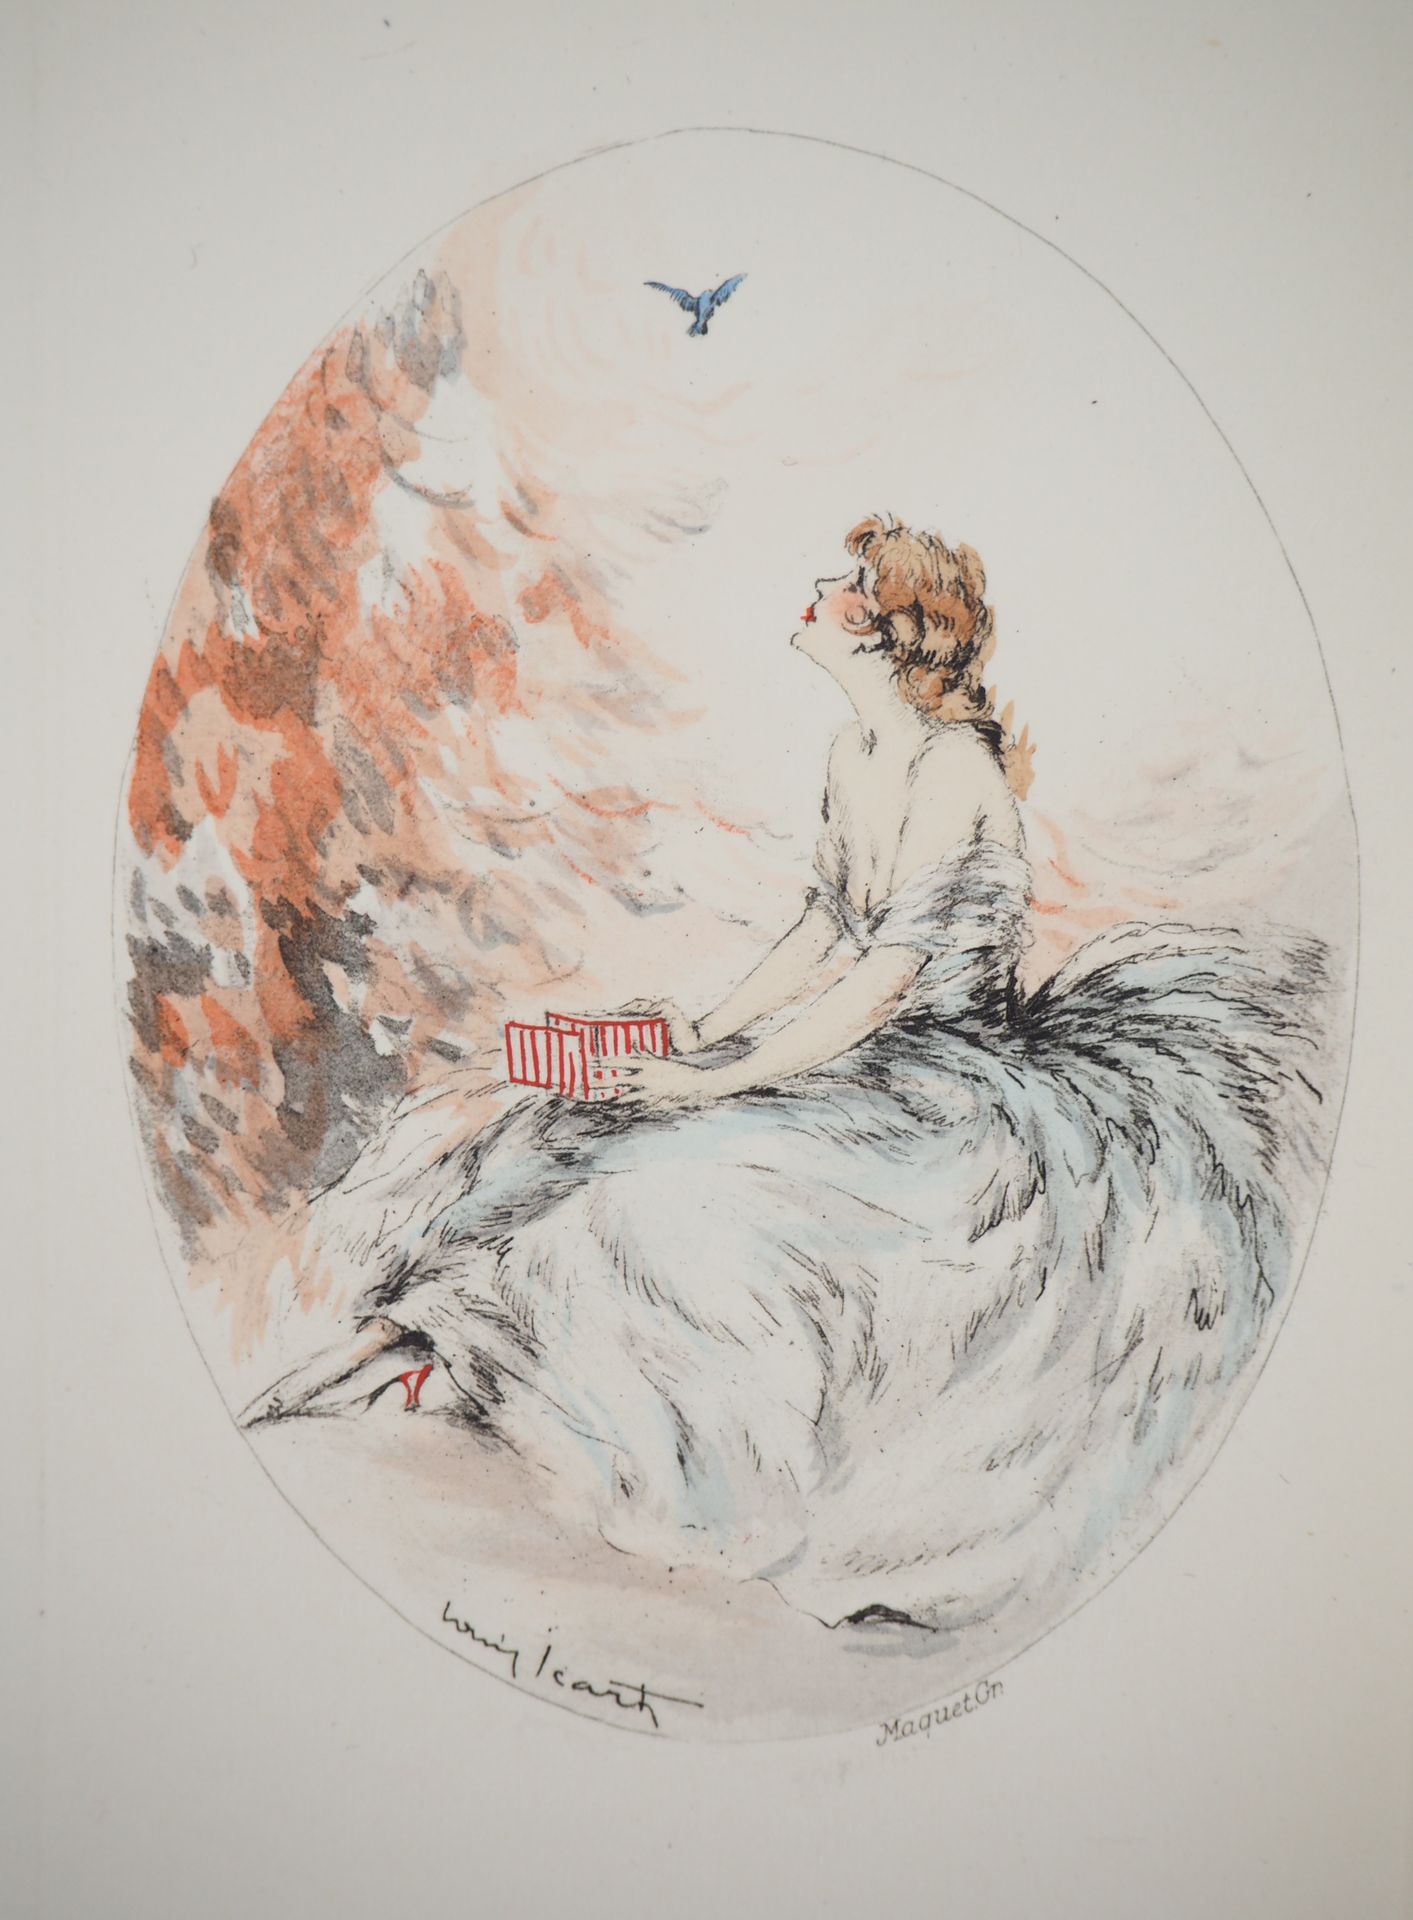 Louis ICART Louis ICART (1888 - 1950)

Giovane donna e l'uccello liberato

Incis&hellip;